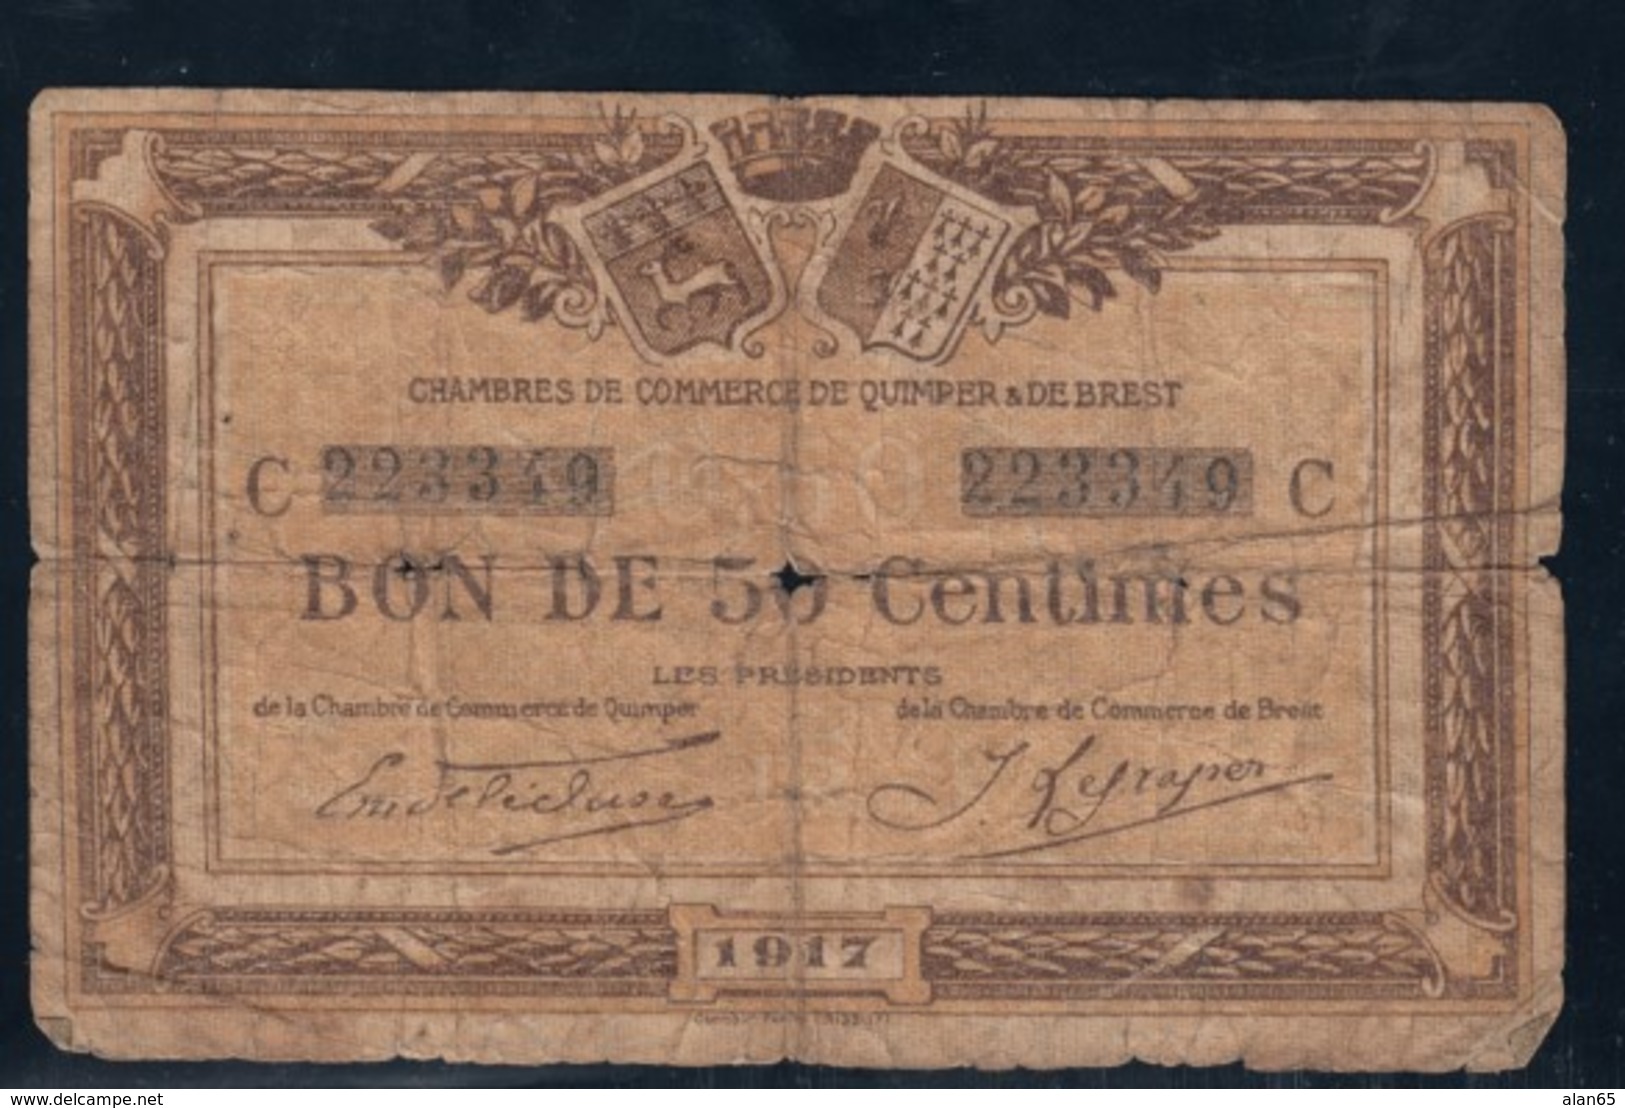 Quimper & Brest Chambre De Commerce 1917 50c Note - Chamber Of Commerce